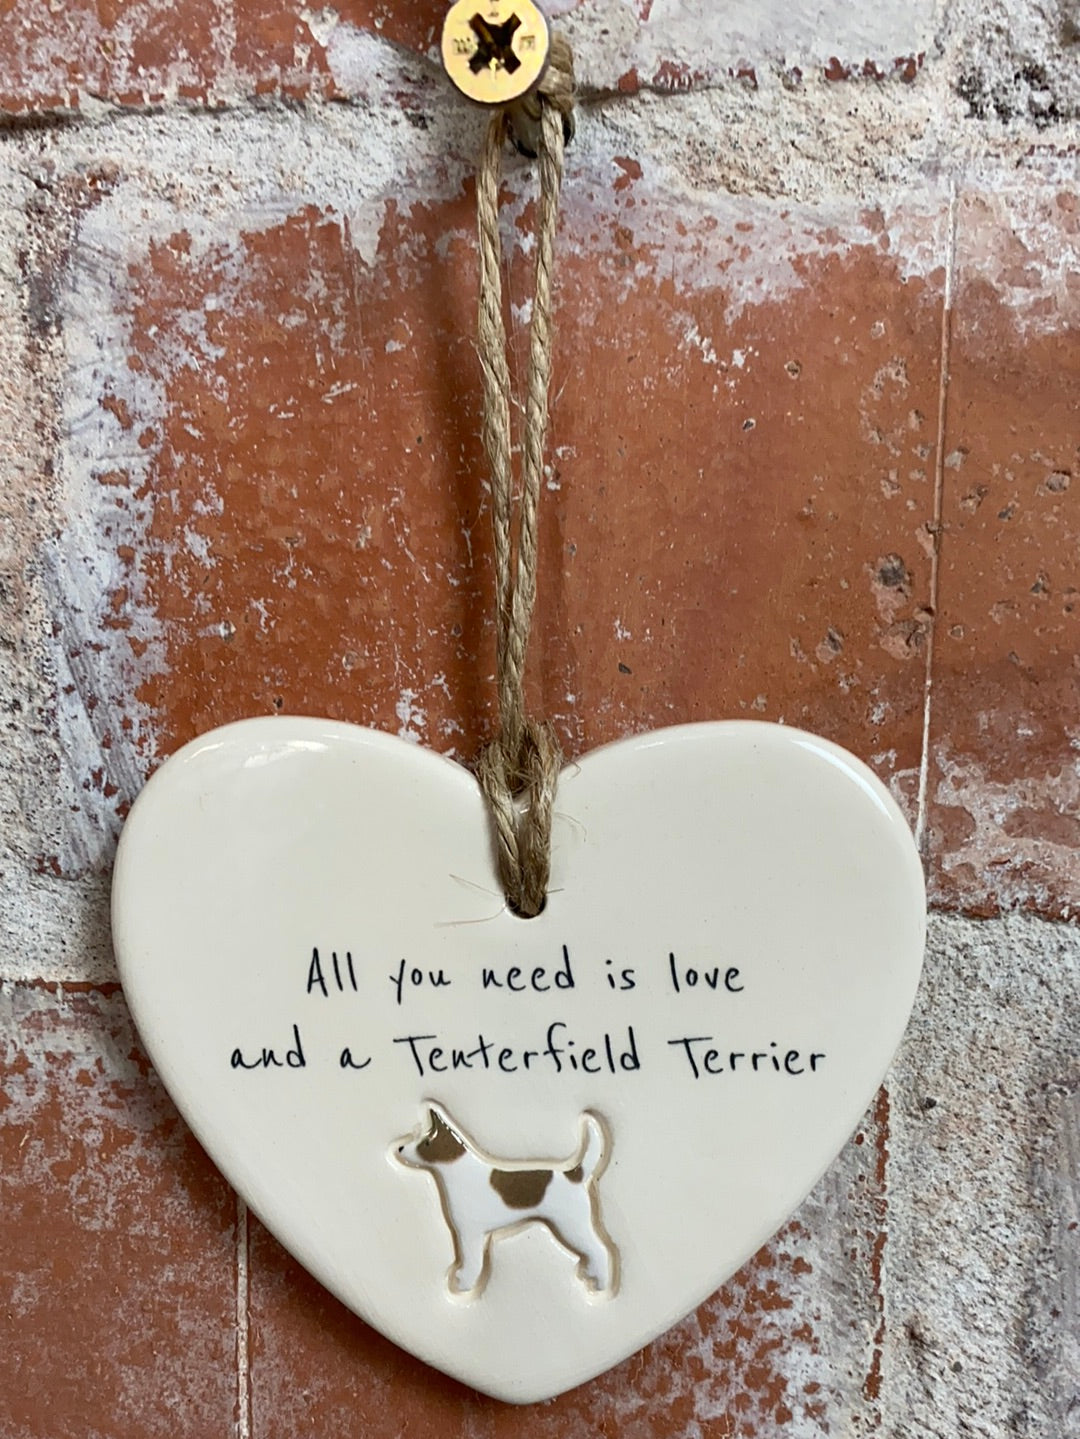 Tenterfield Terrier ceramic heart